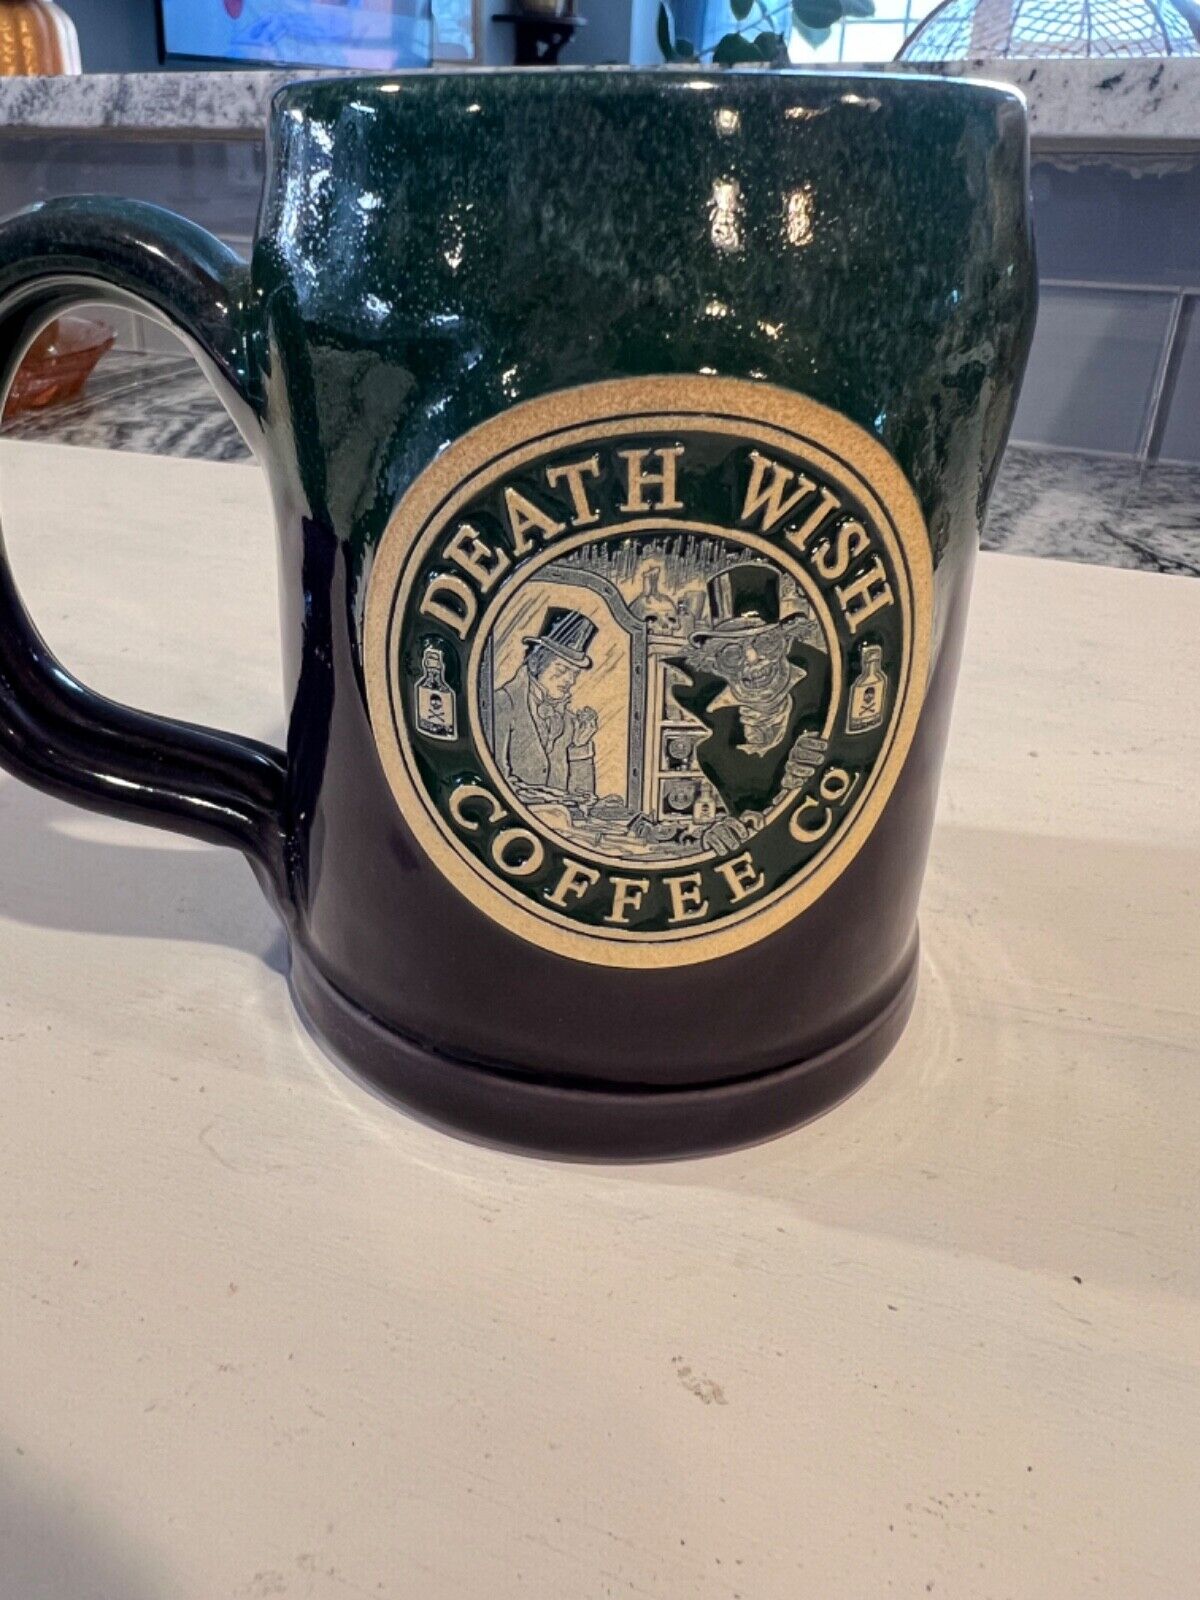 Death Wish Coffee Mug Jekyll and Hyde 2019 Deneen Pottery 1409/4000